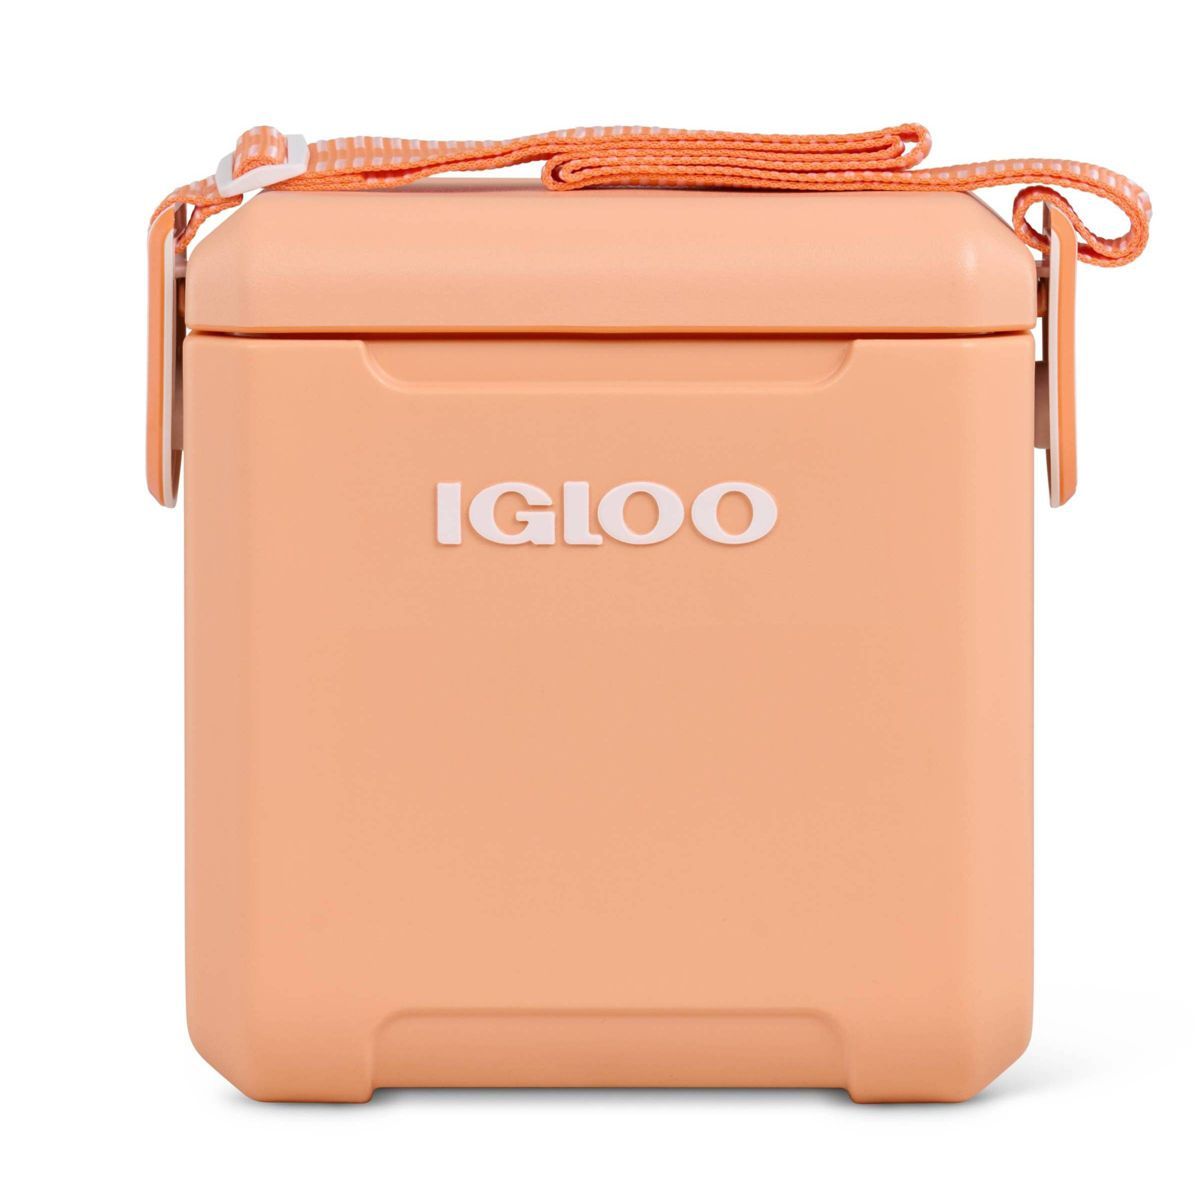 Igloo Tag Along Too 11qt Hard Sided Cooler - Apricot | Target